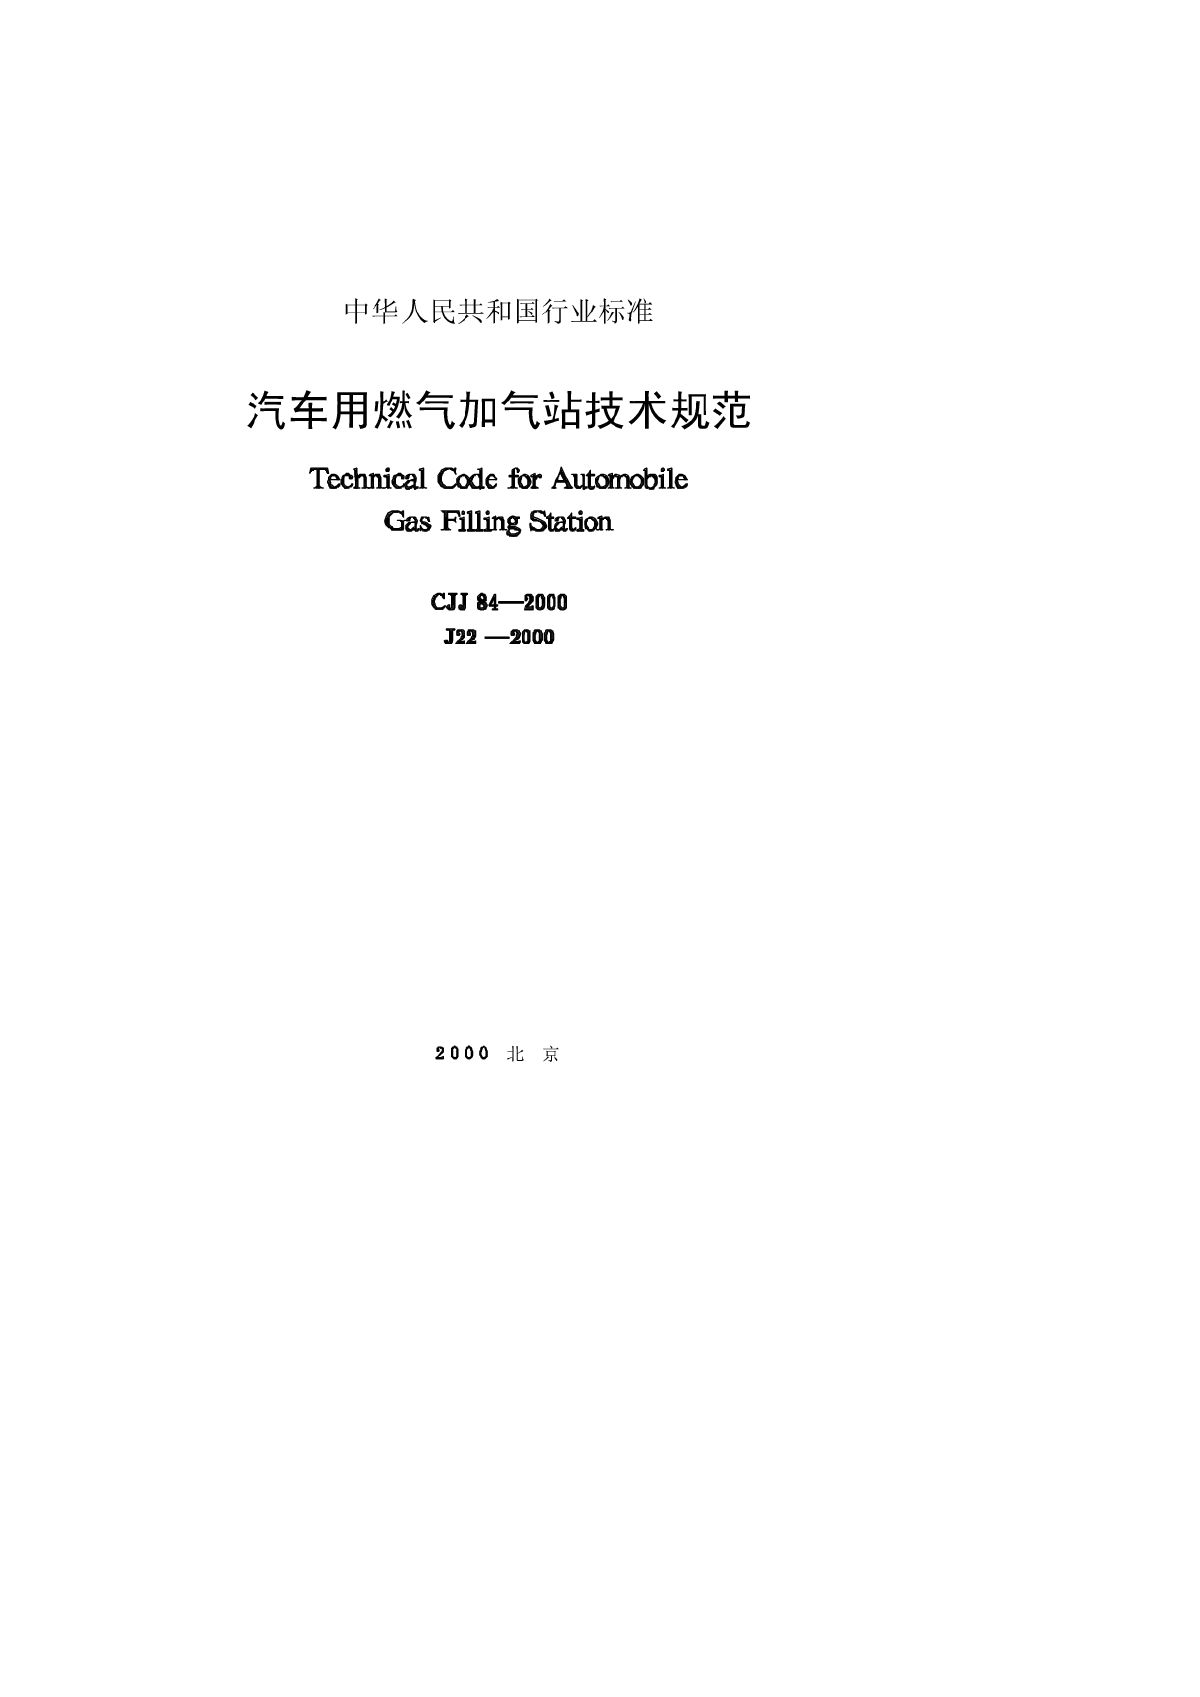 CJJ84-2000汽车用燃气加气站技术规范.pdf-图一